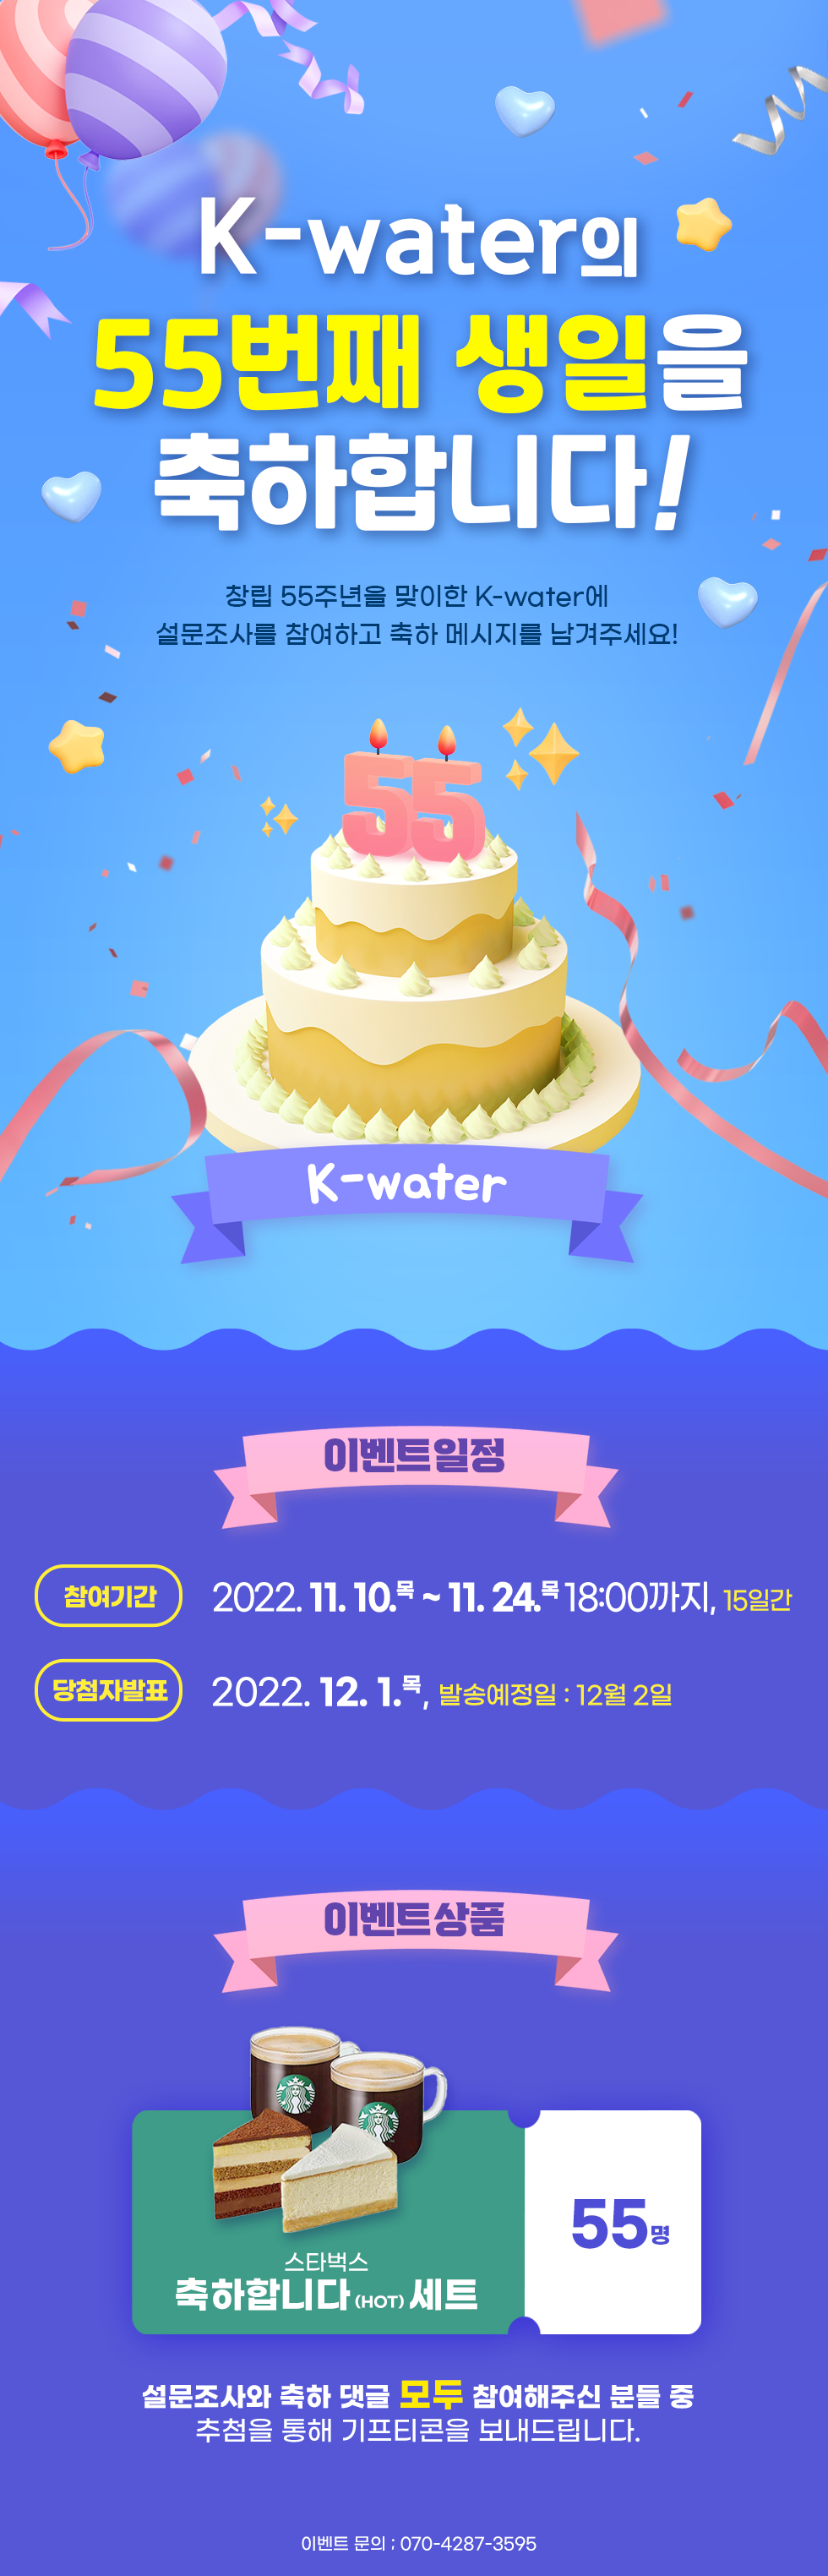 K-water의 55번쨰 생일을 축하합니다! 창립 55주년을 맞이한 K-water에 설문조사를 참여하고 축하 메시지를 남겨주세요!